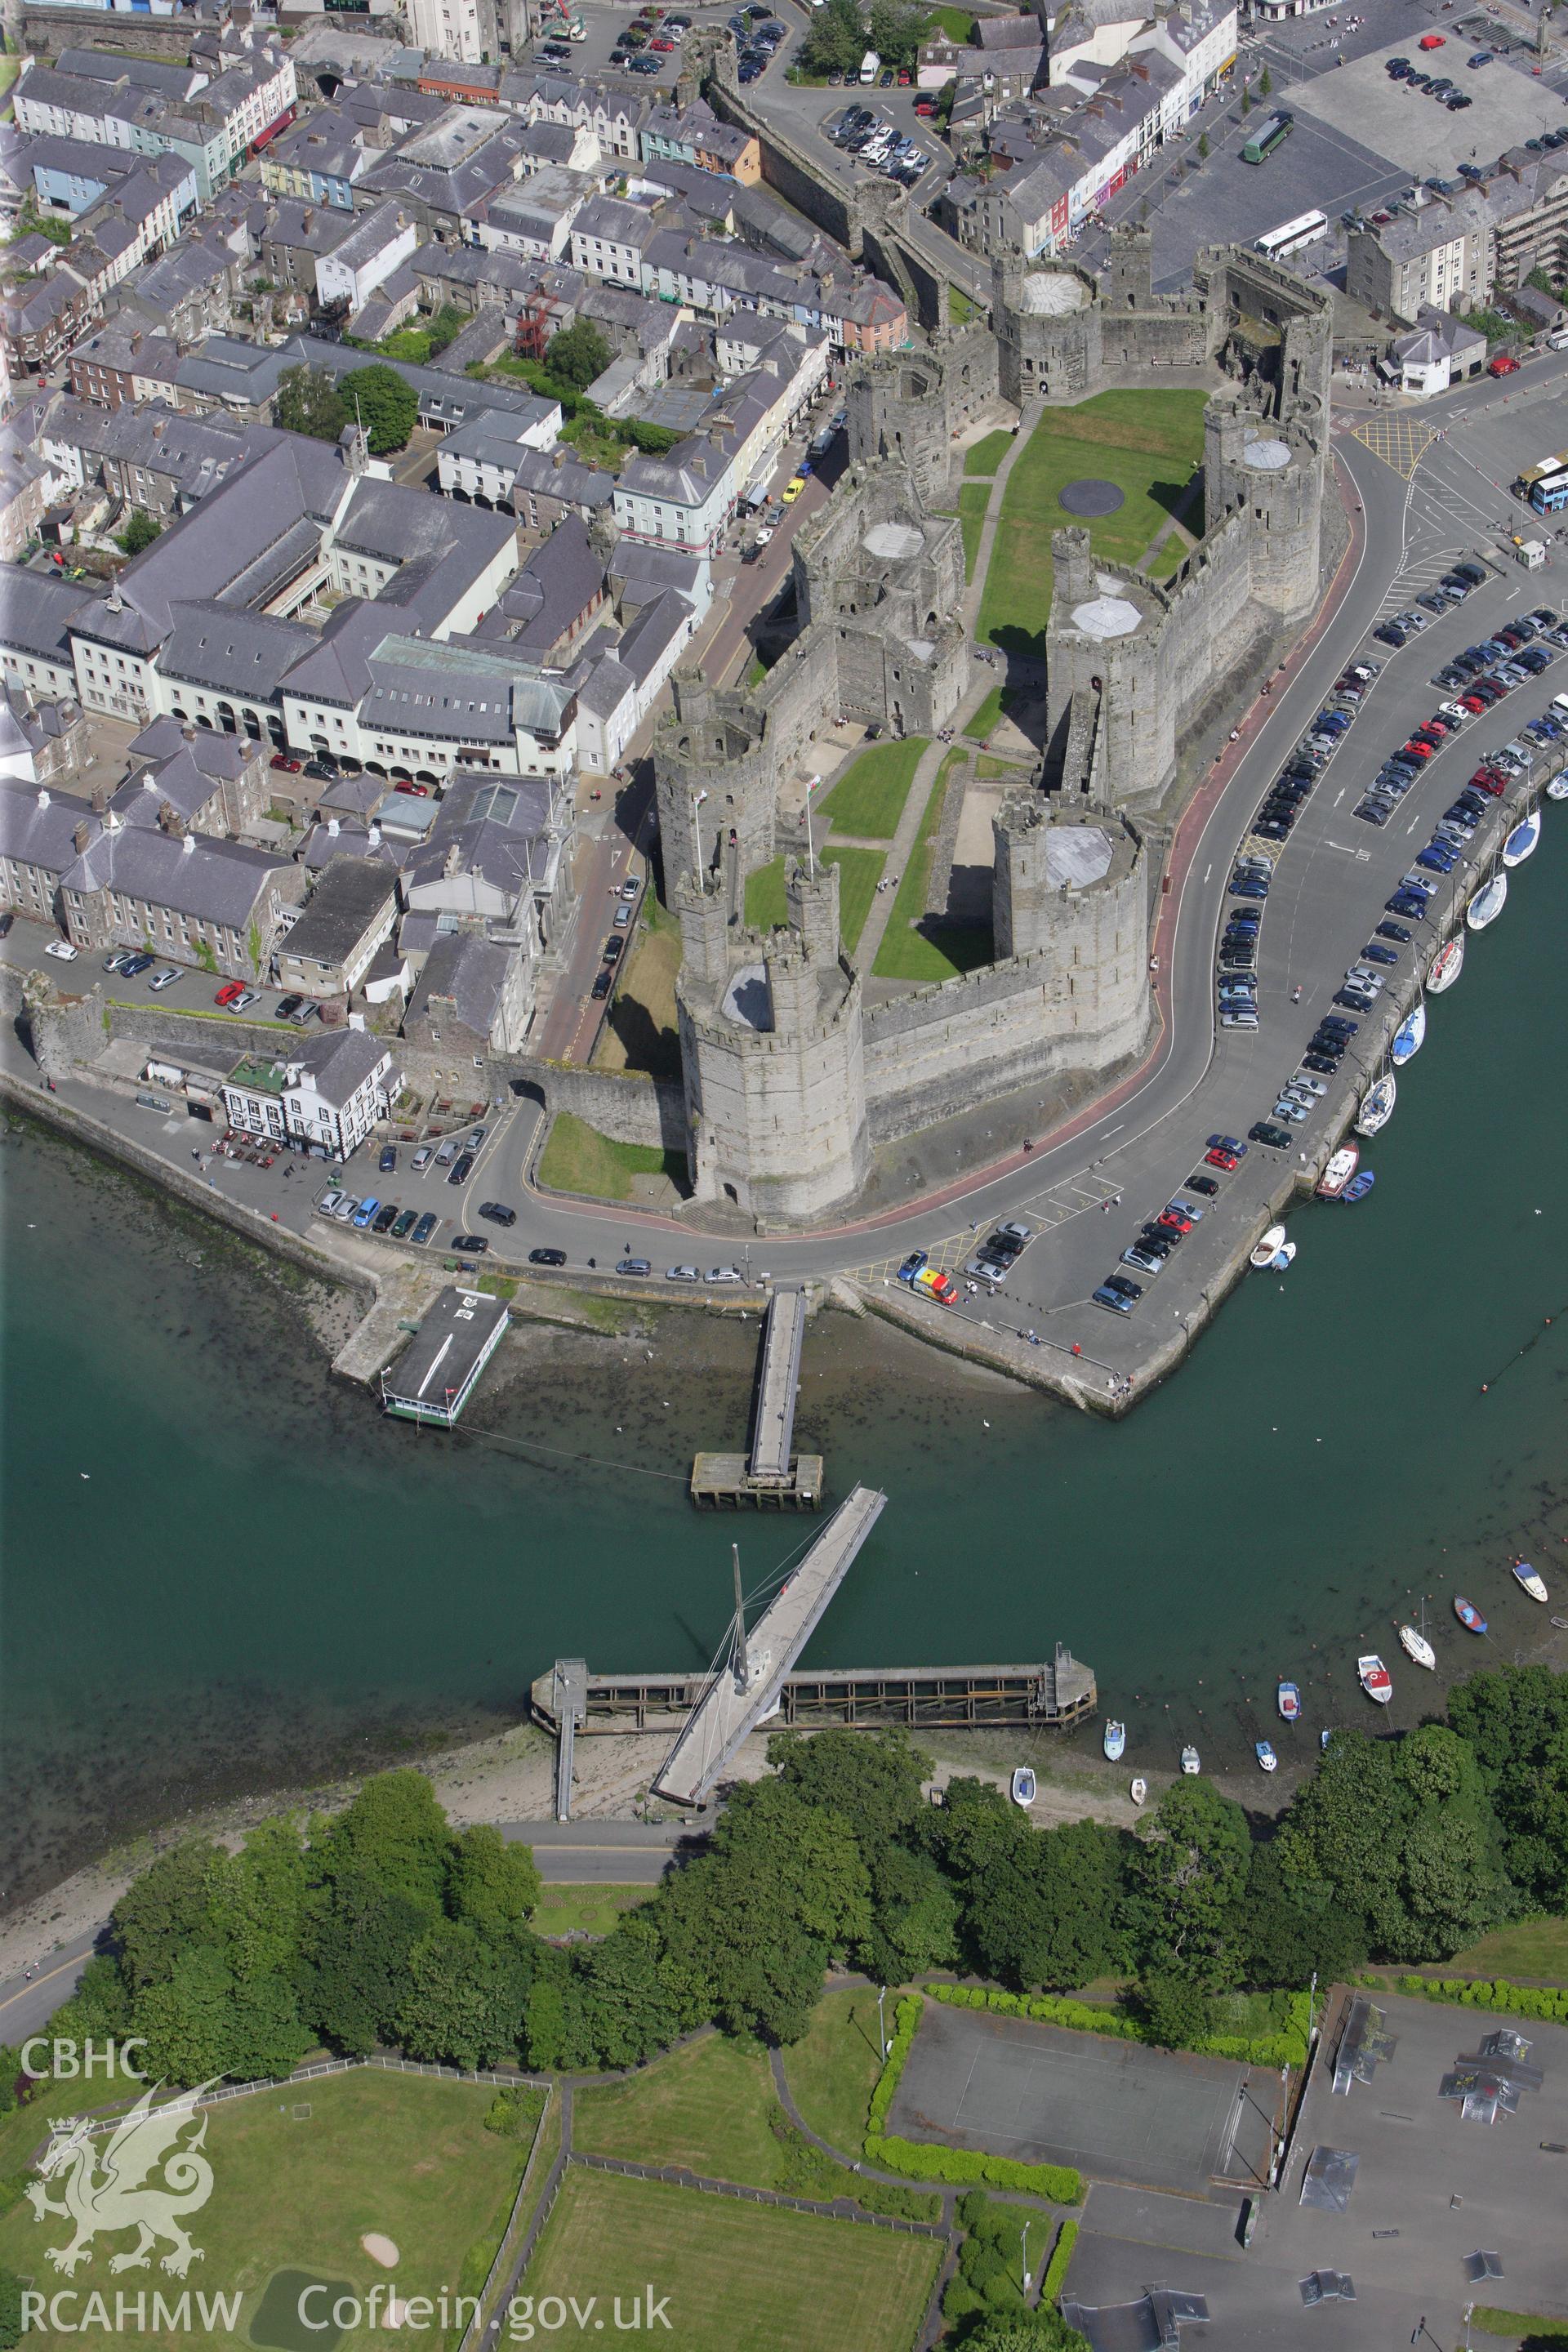 RCAHMW colour oblique aerial photograph of Caernarfon Swing Bridge. Taken on 16 June 2009 by Toby Driver